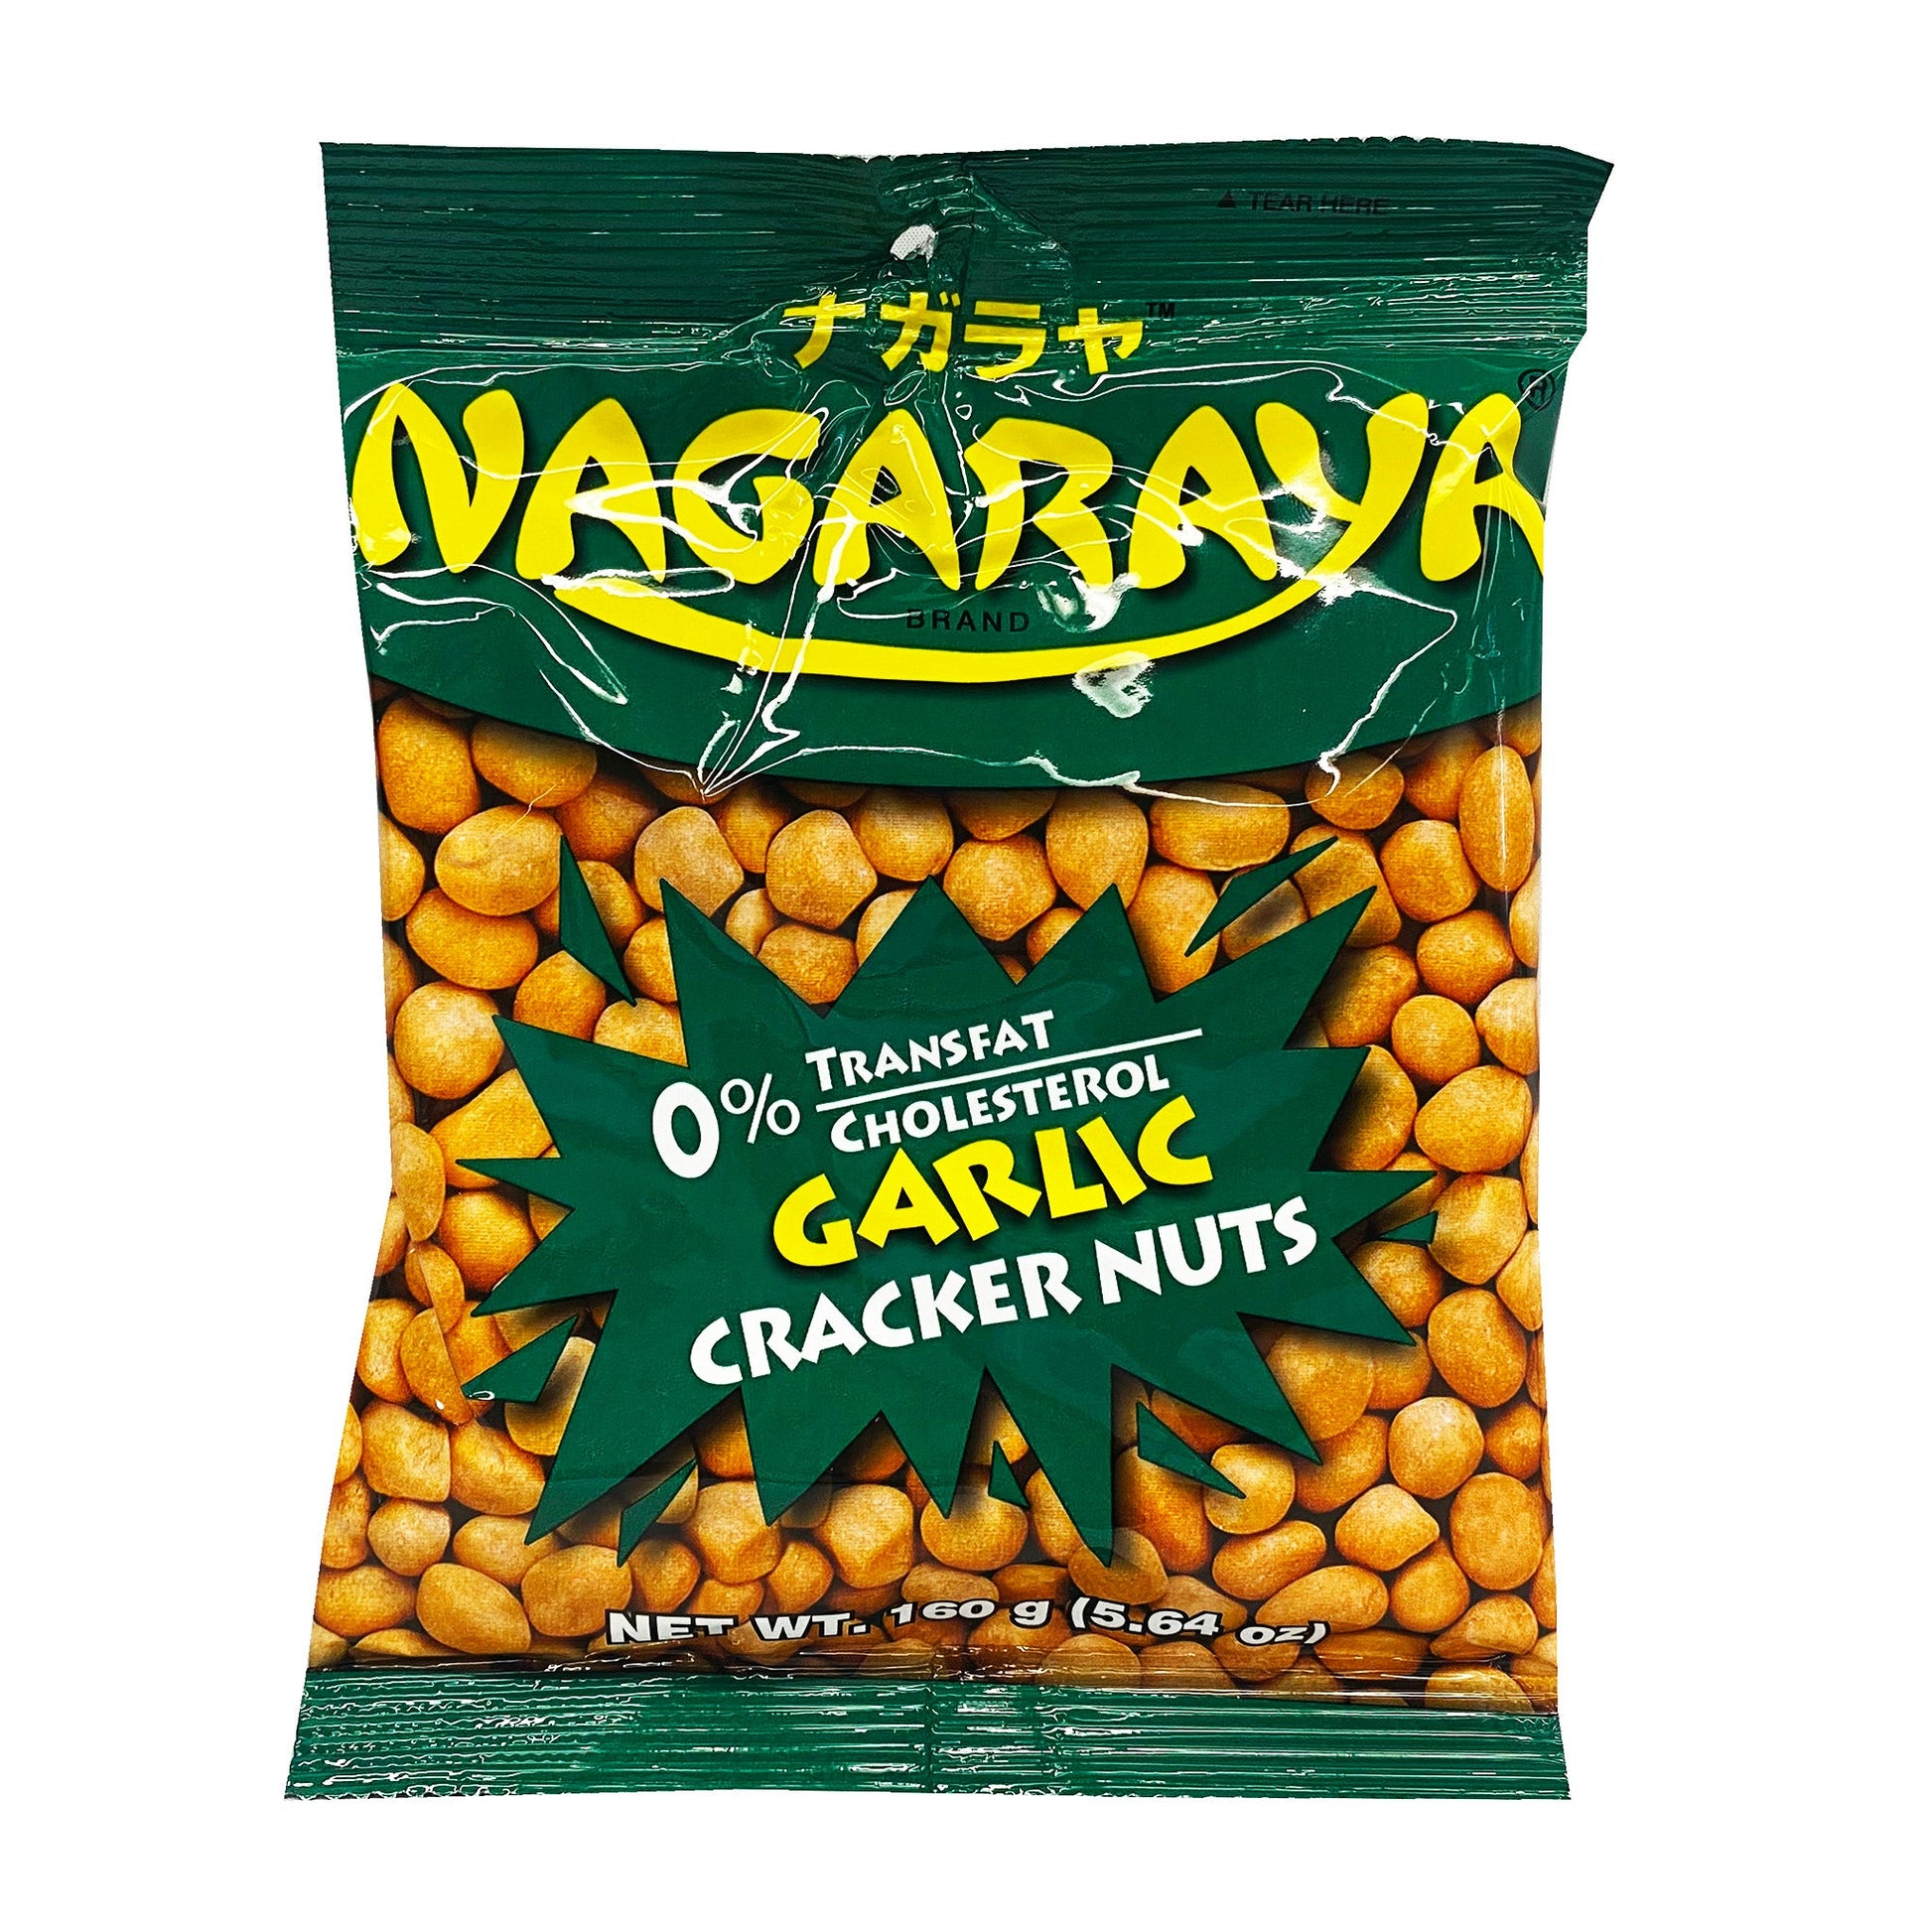 Front graphic image of Nagaraya Cracker Nuts Garlic Flavor 5.64oz